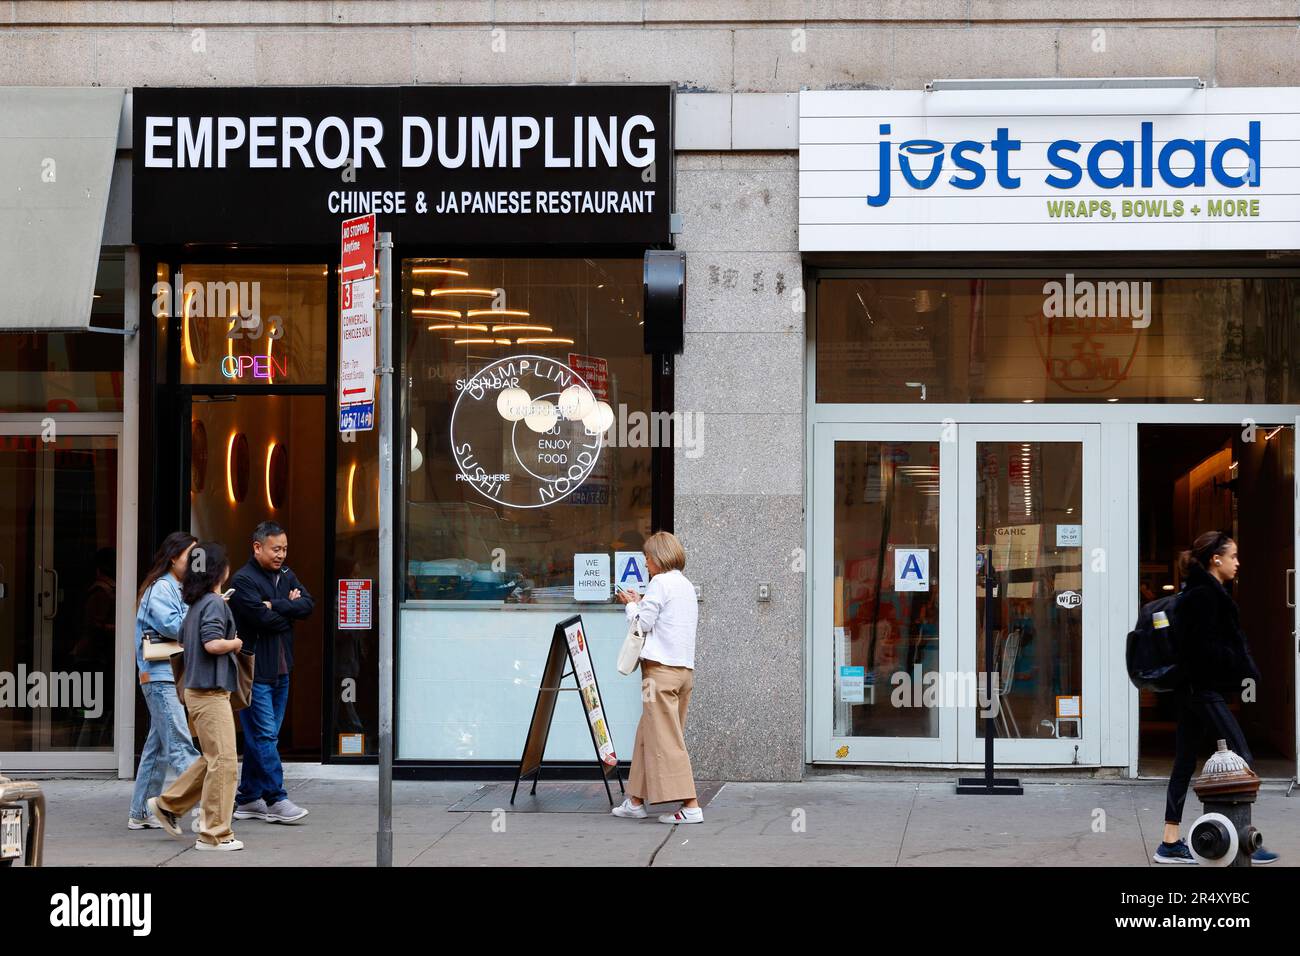 Emperor Dumpling, 293 7th Ave, New York, NYC storefront photo of a Chinese dumpling restaurant in Manhattan's Chelsea neighborhood. Stock Photo